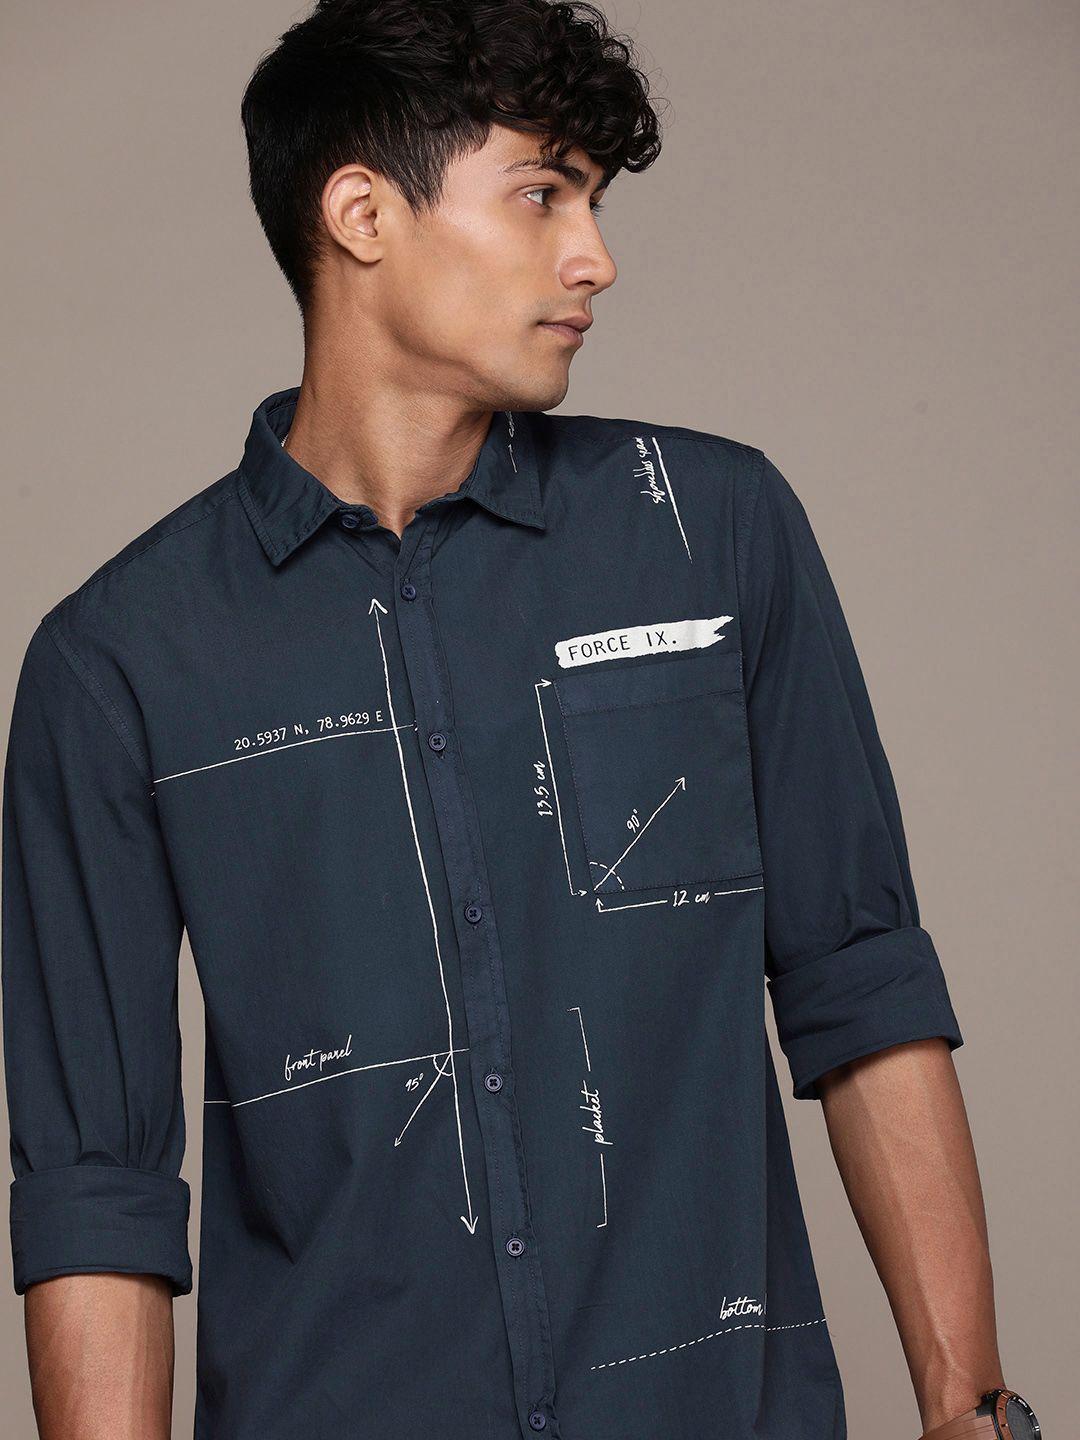 force ix slim fit geometric printed pure cotton casual shirt